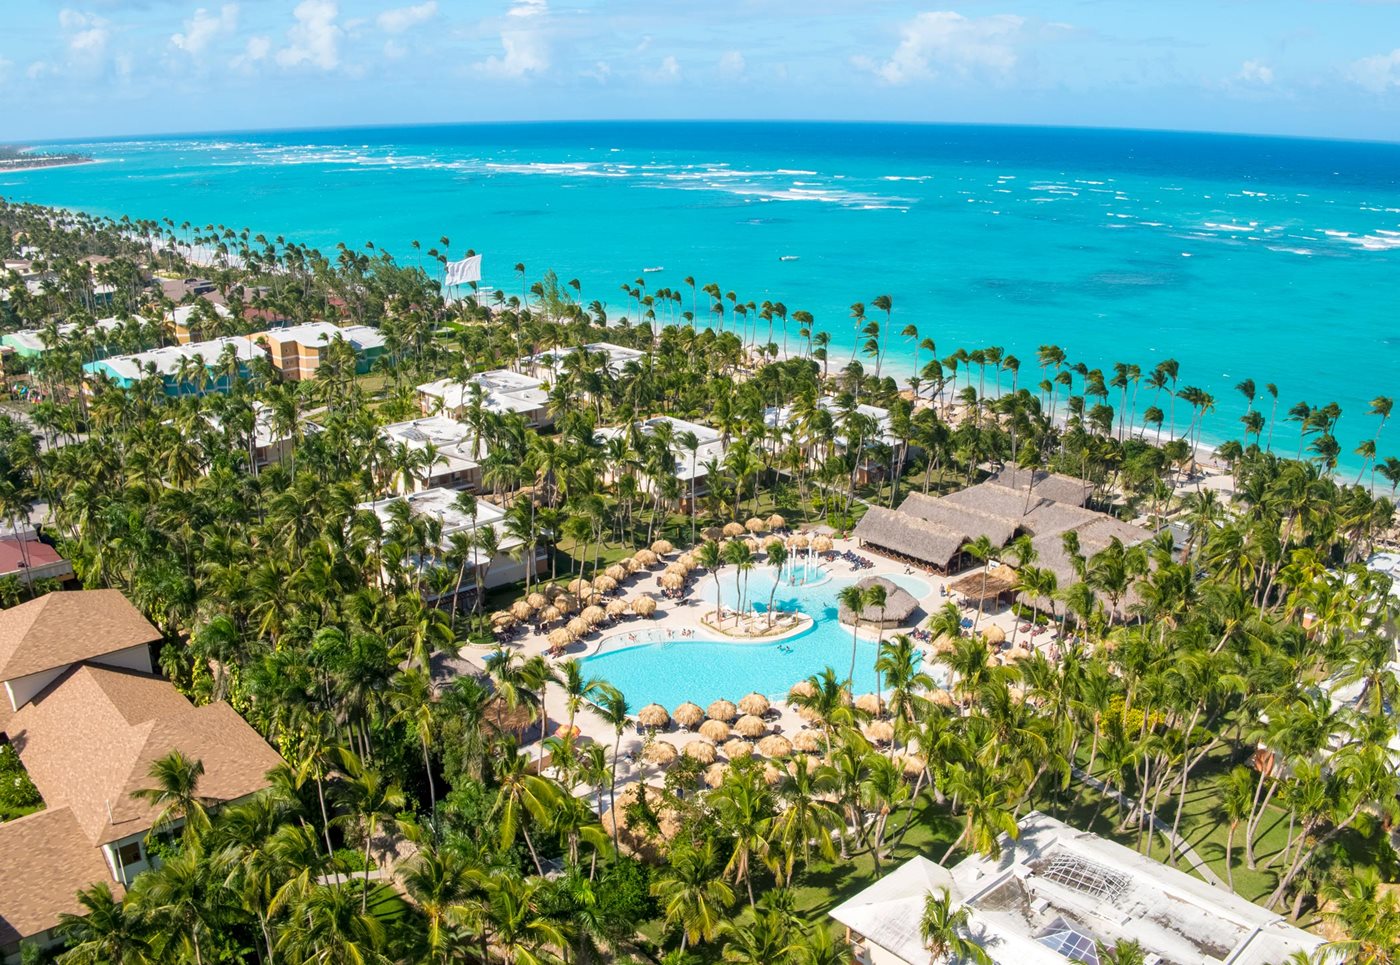 Aerial view of Barahona Pool, Grand Palladium Palace Resort, Punta Cana